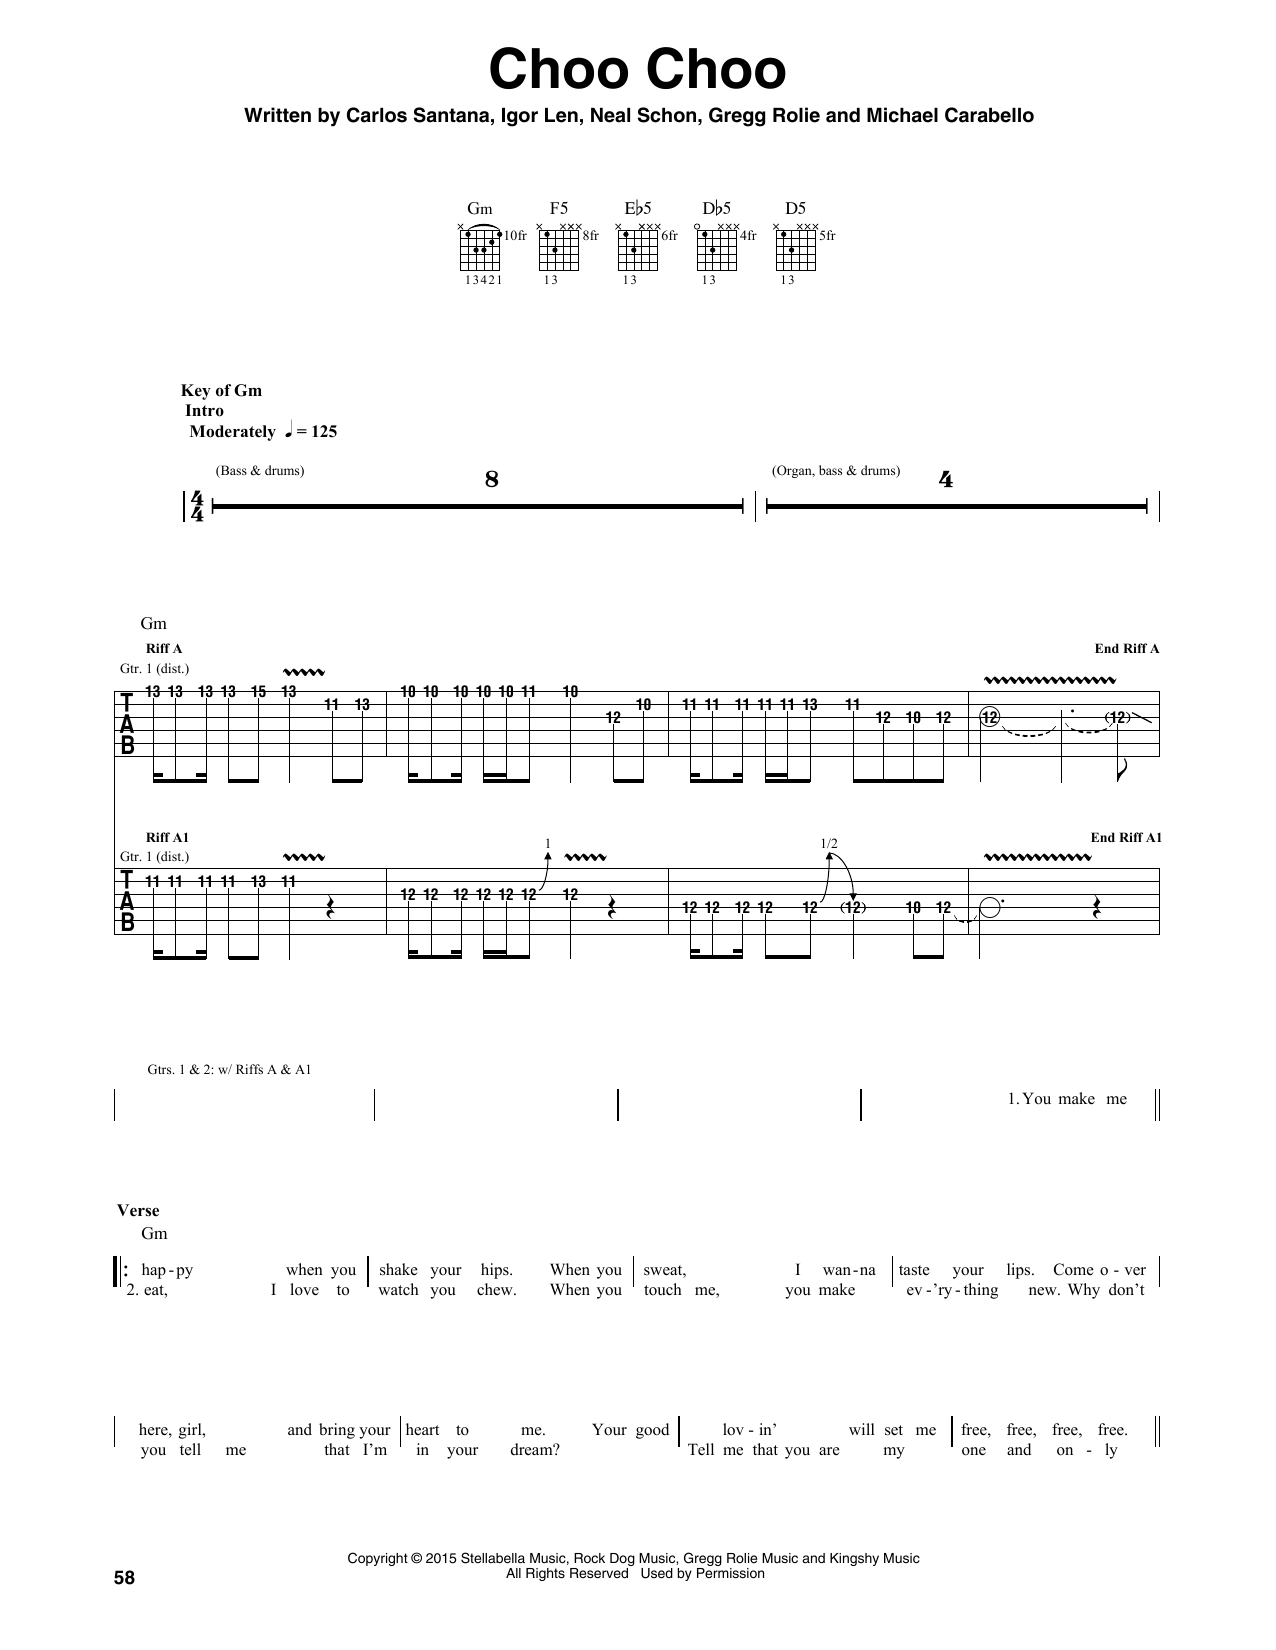 Santana Choo Choo Sheet Music Notes & Chords for Guitar Tab - Download or Print PDF